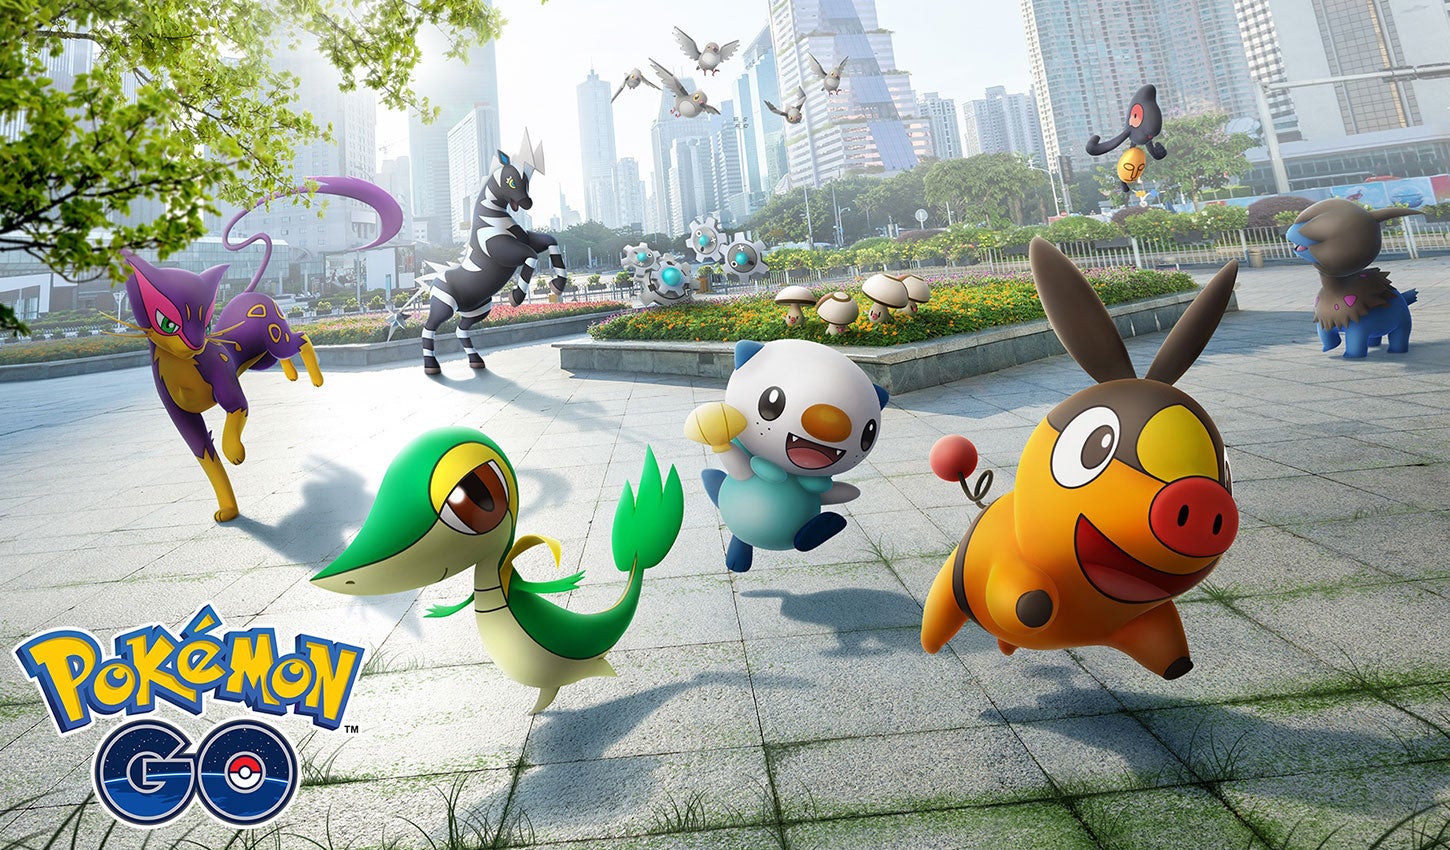 Image for Pokémon Go's 2020 revenues estimated at $1bn so far